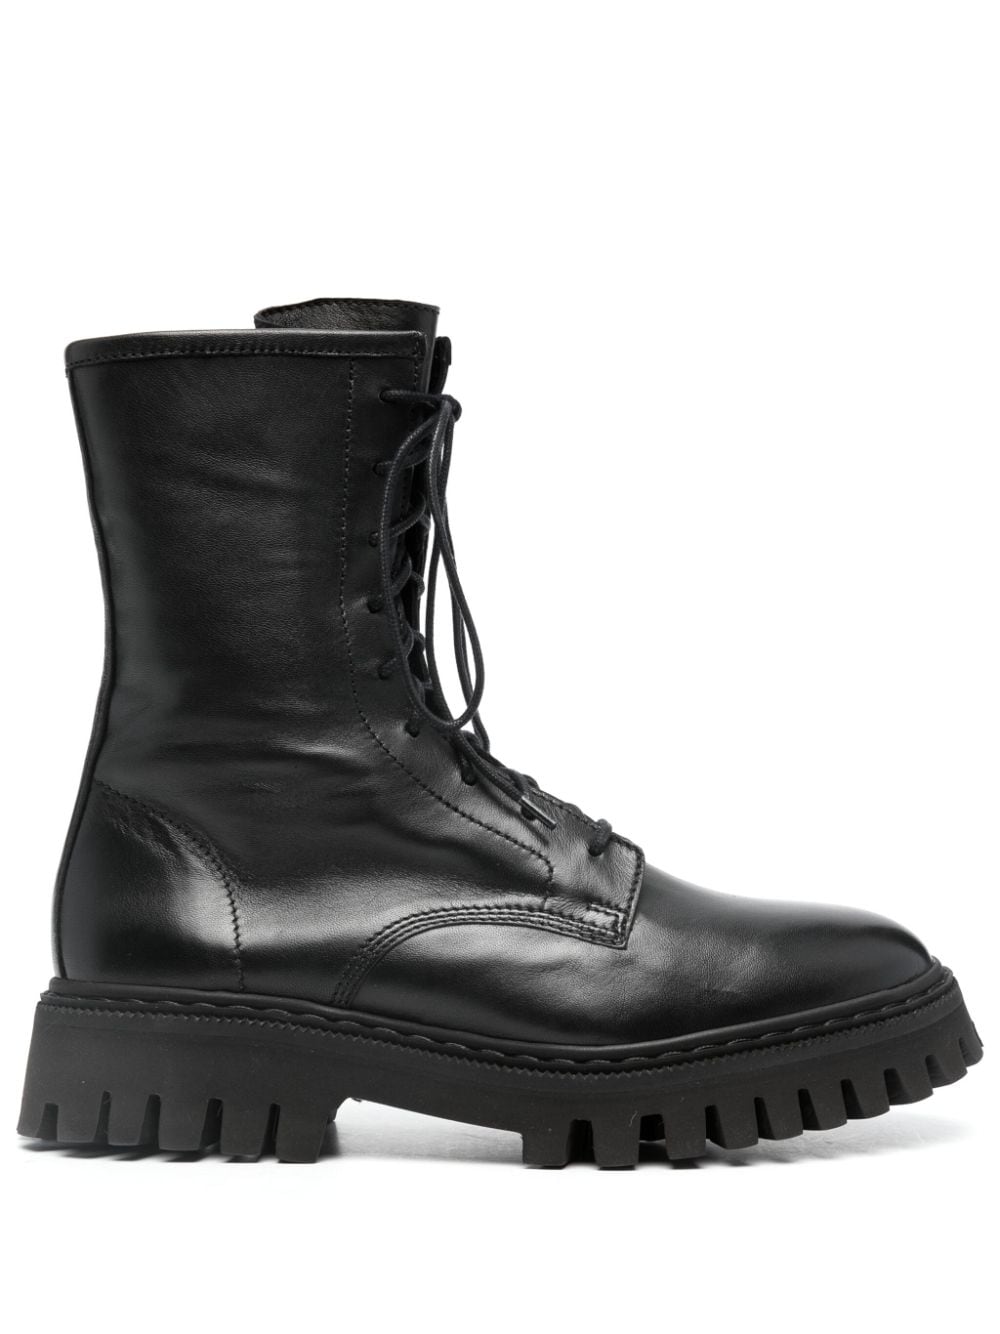 Kosmic leather boots